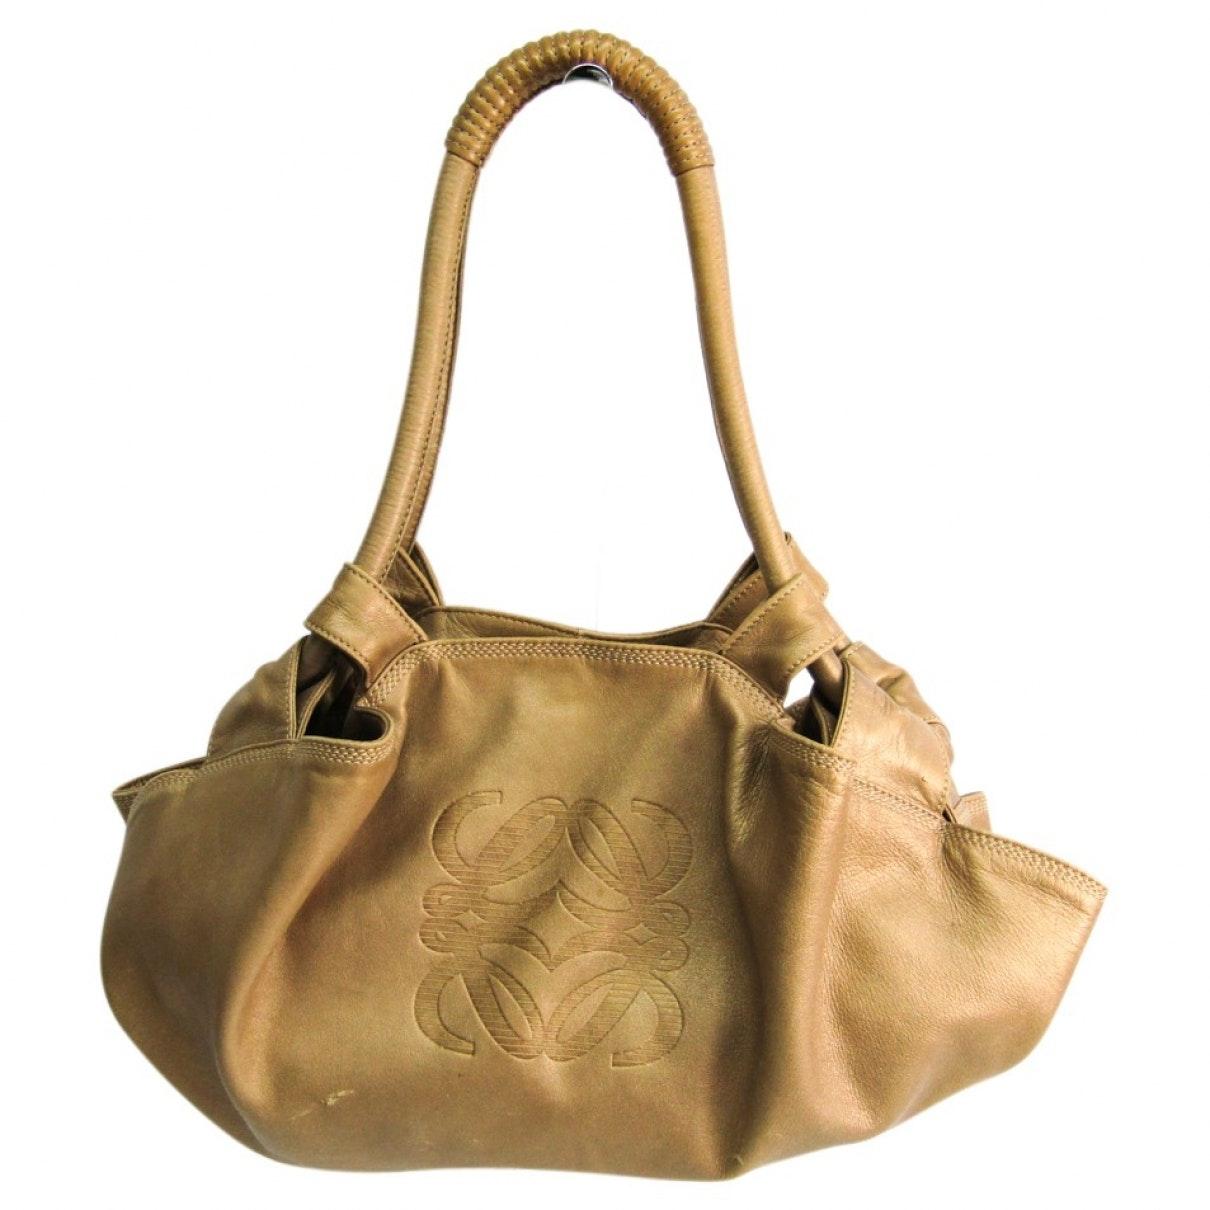 Loewe Leather Handbag in Gold (Metallic) - Lyst